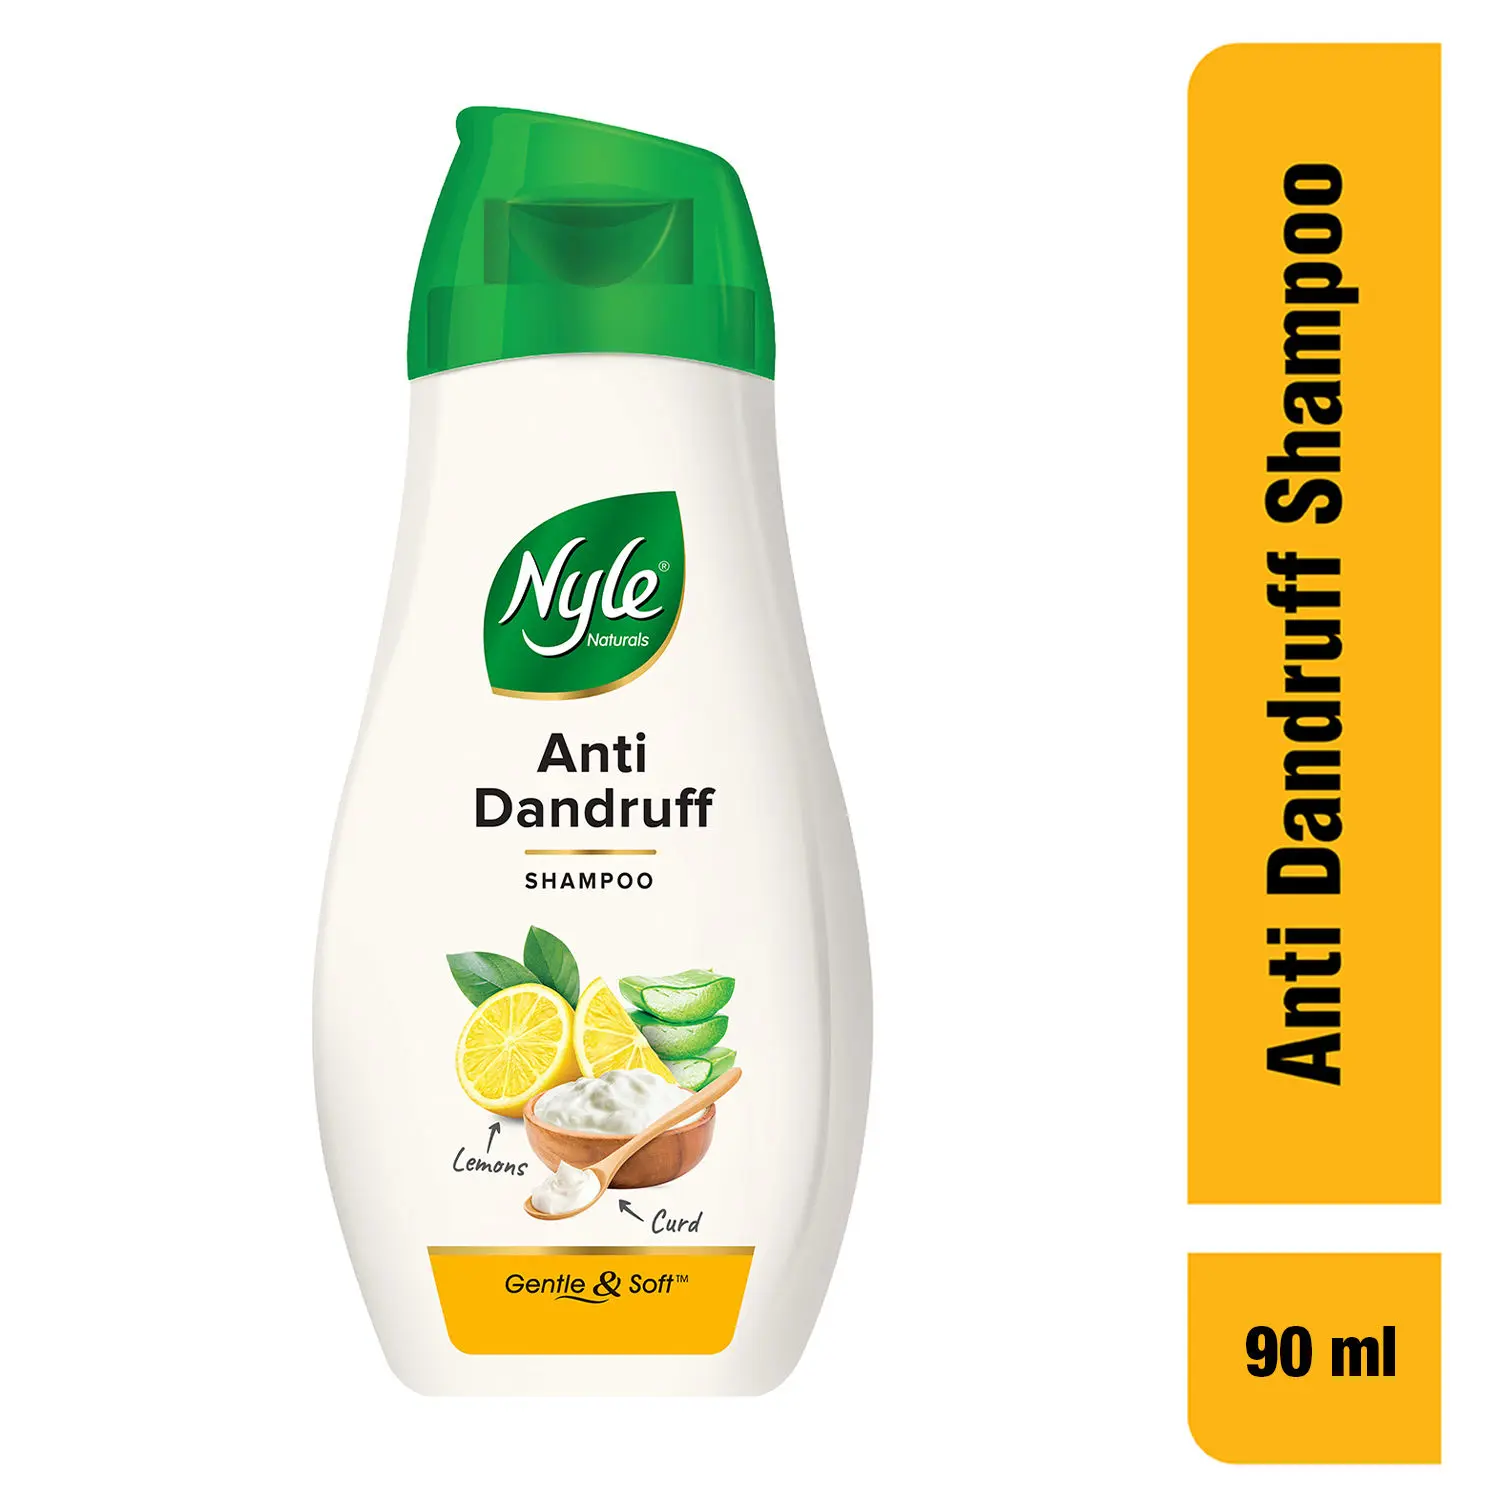 Nyle Naturals Anti-Dandruff Shampoo, With Curd, Lemon and Aloe Vera, Gentle & Soft, pH Balanced and Paraben Free, For Men & Women, 90ml